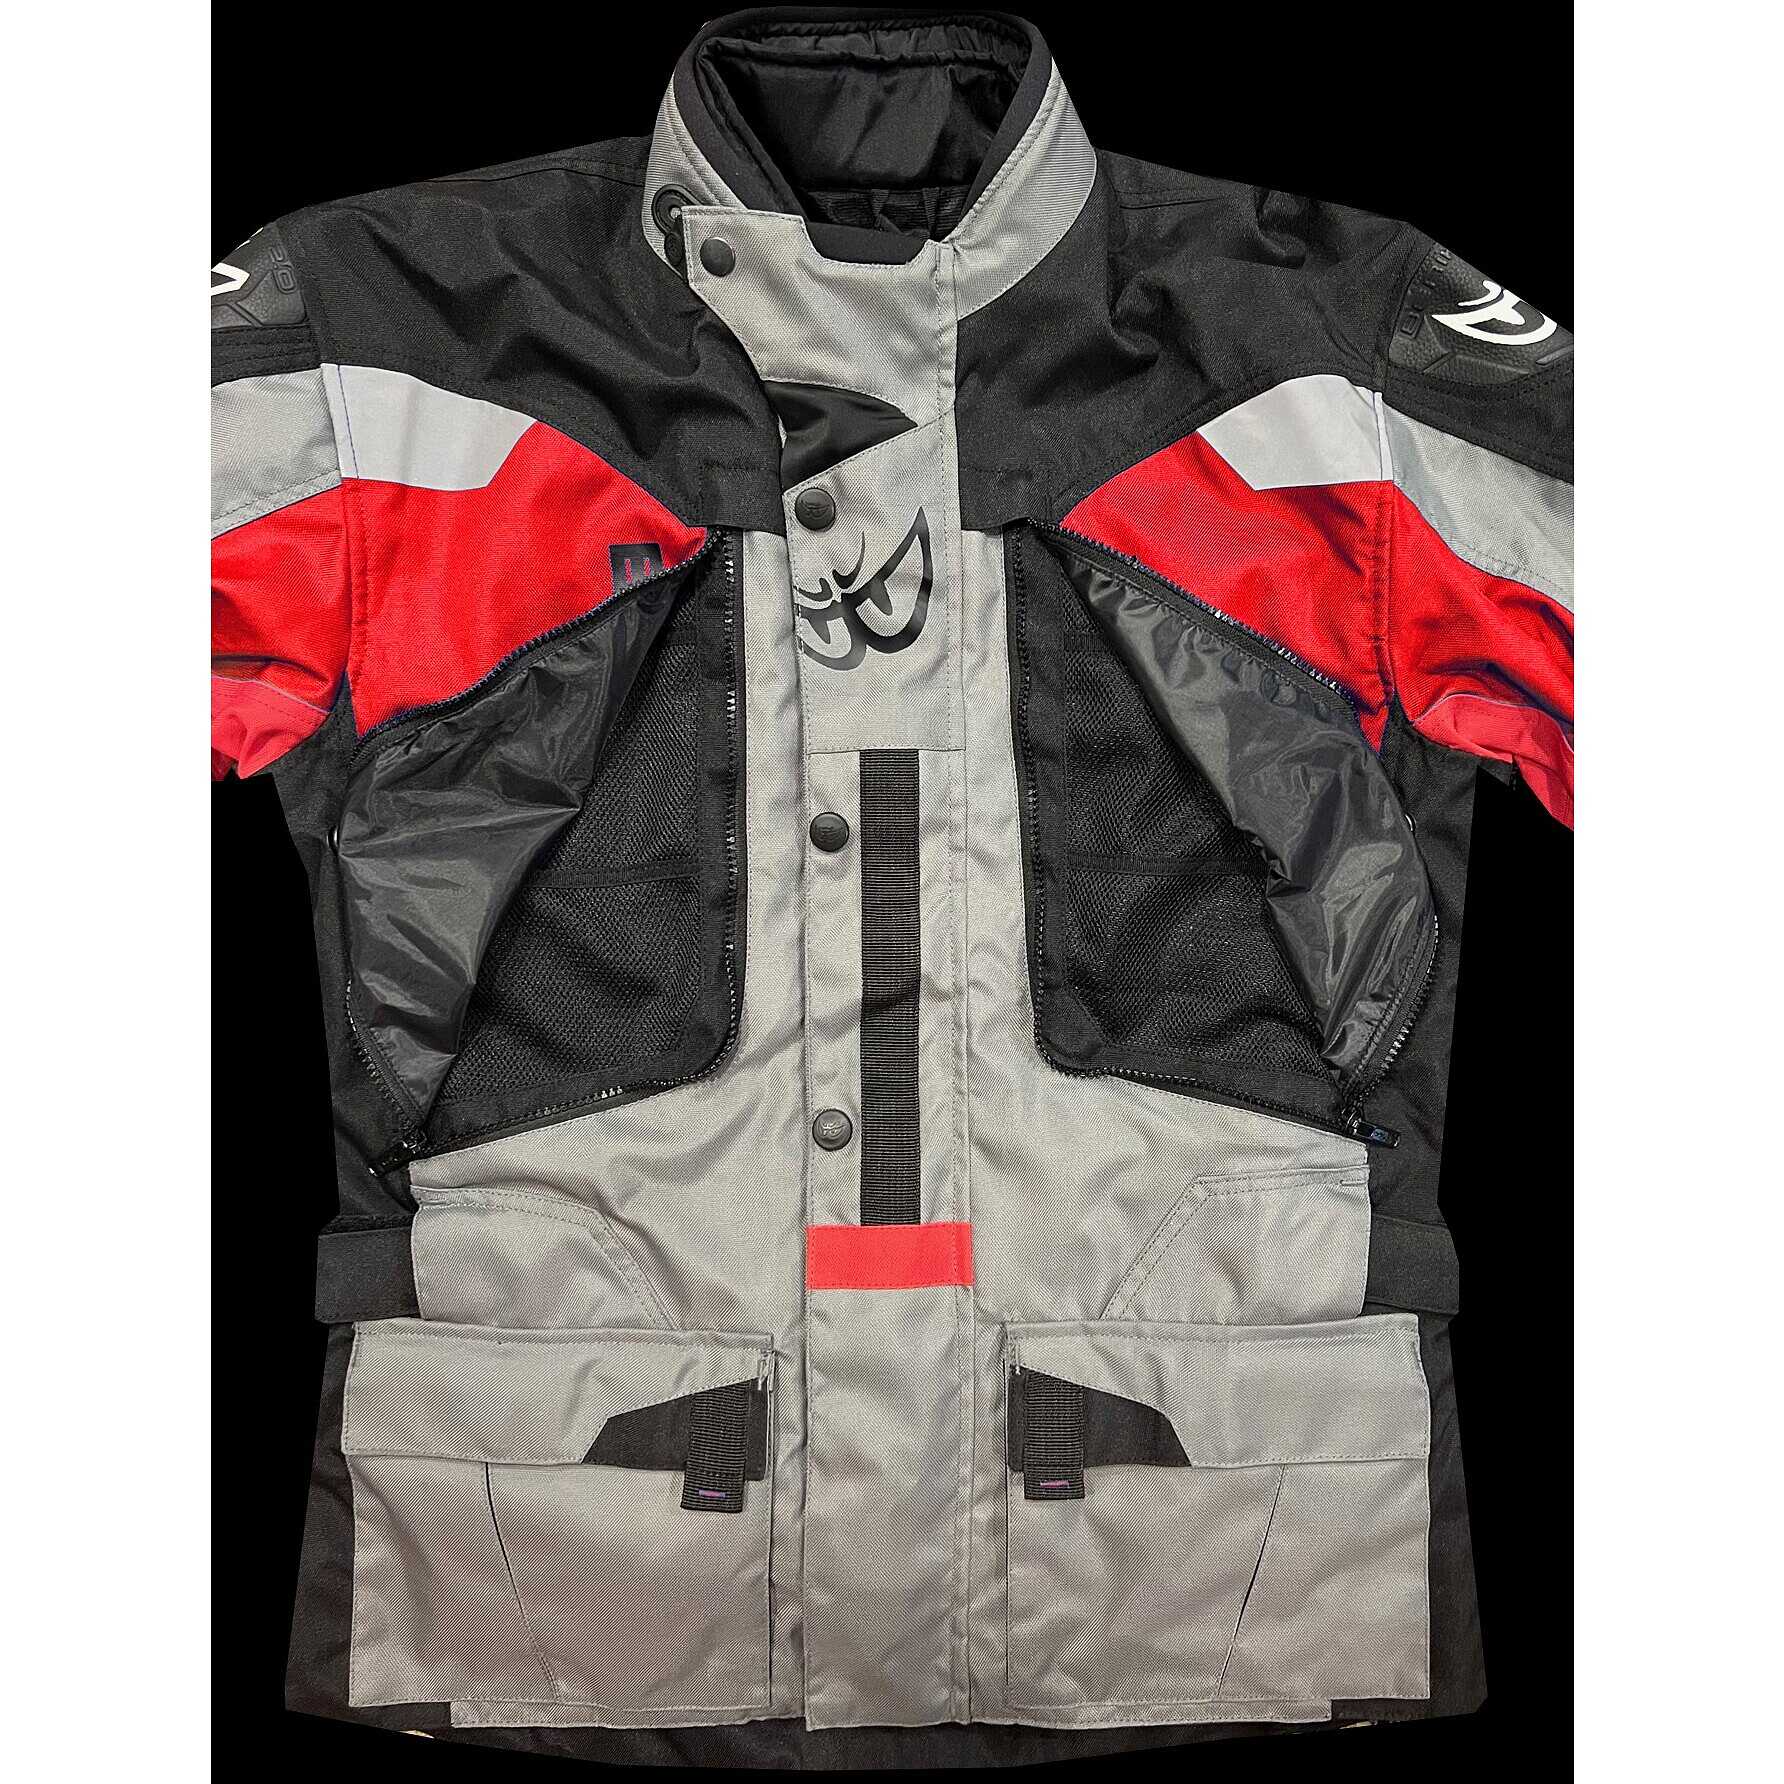 Motorcycle Jacket Technical Fabric Berik 2.0 NJ-173302 Gradient